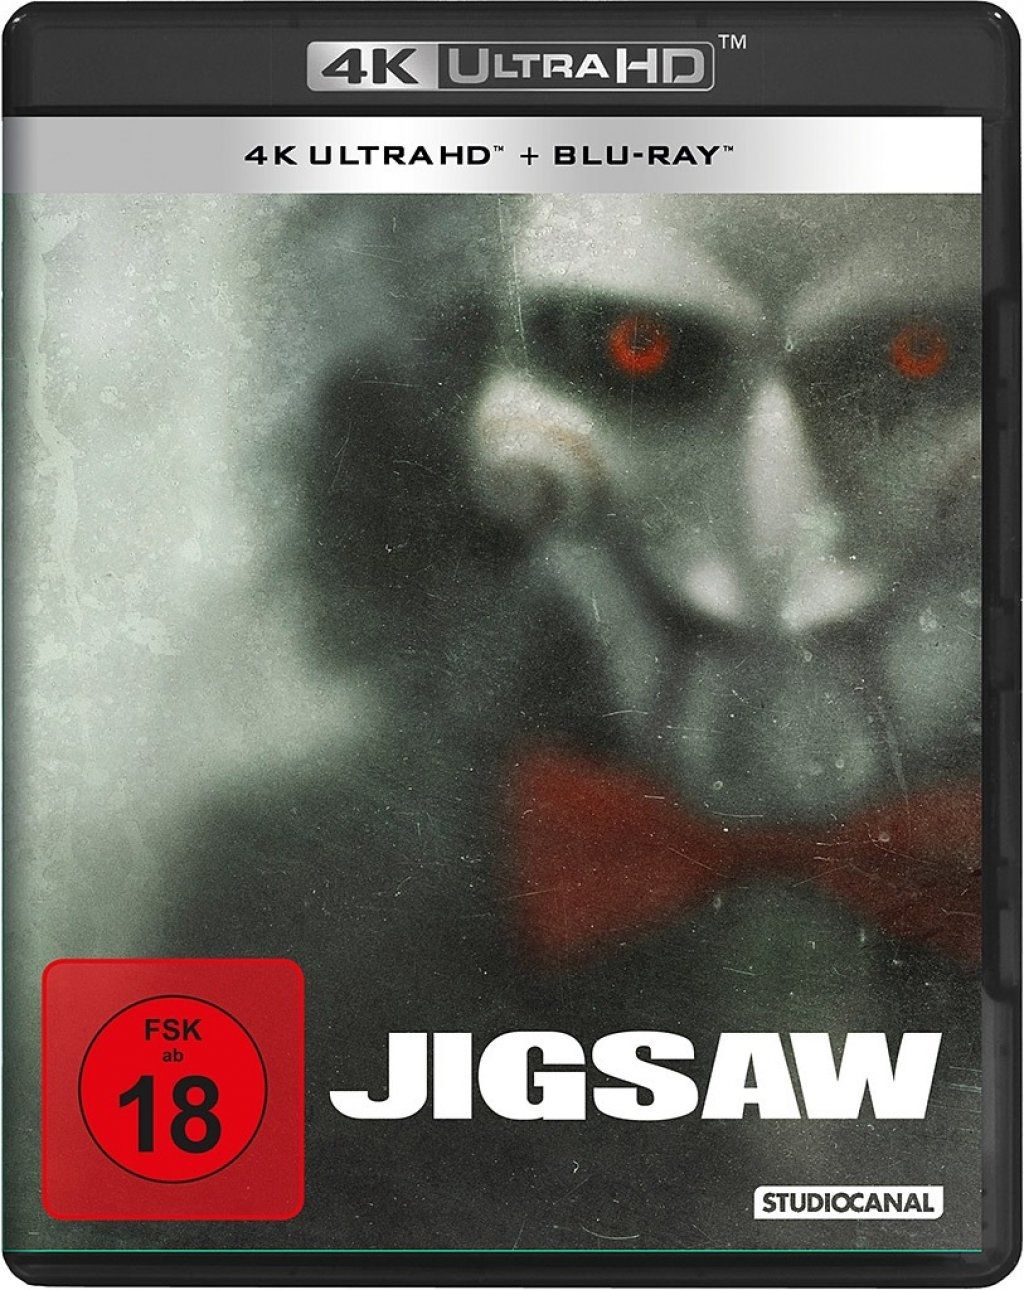 Saw 8 - Jigsaw (2 Discs) (UHD BLURAY + BLURAY)